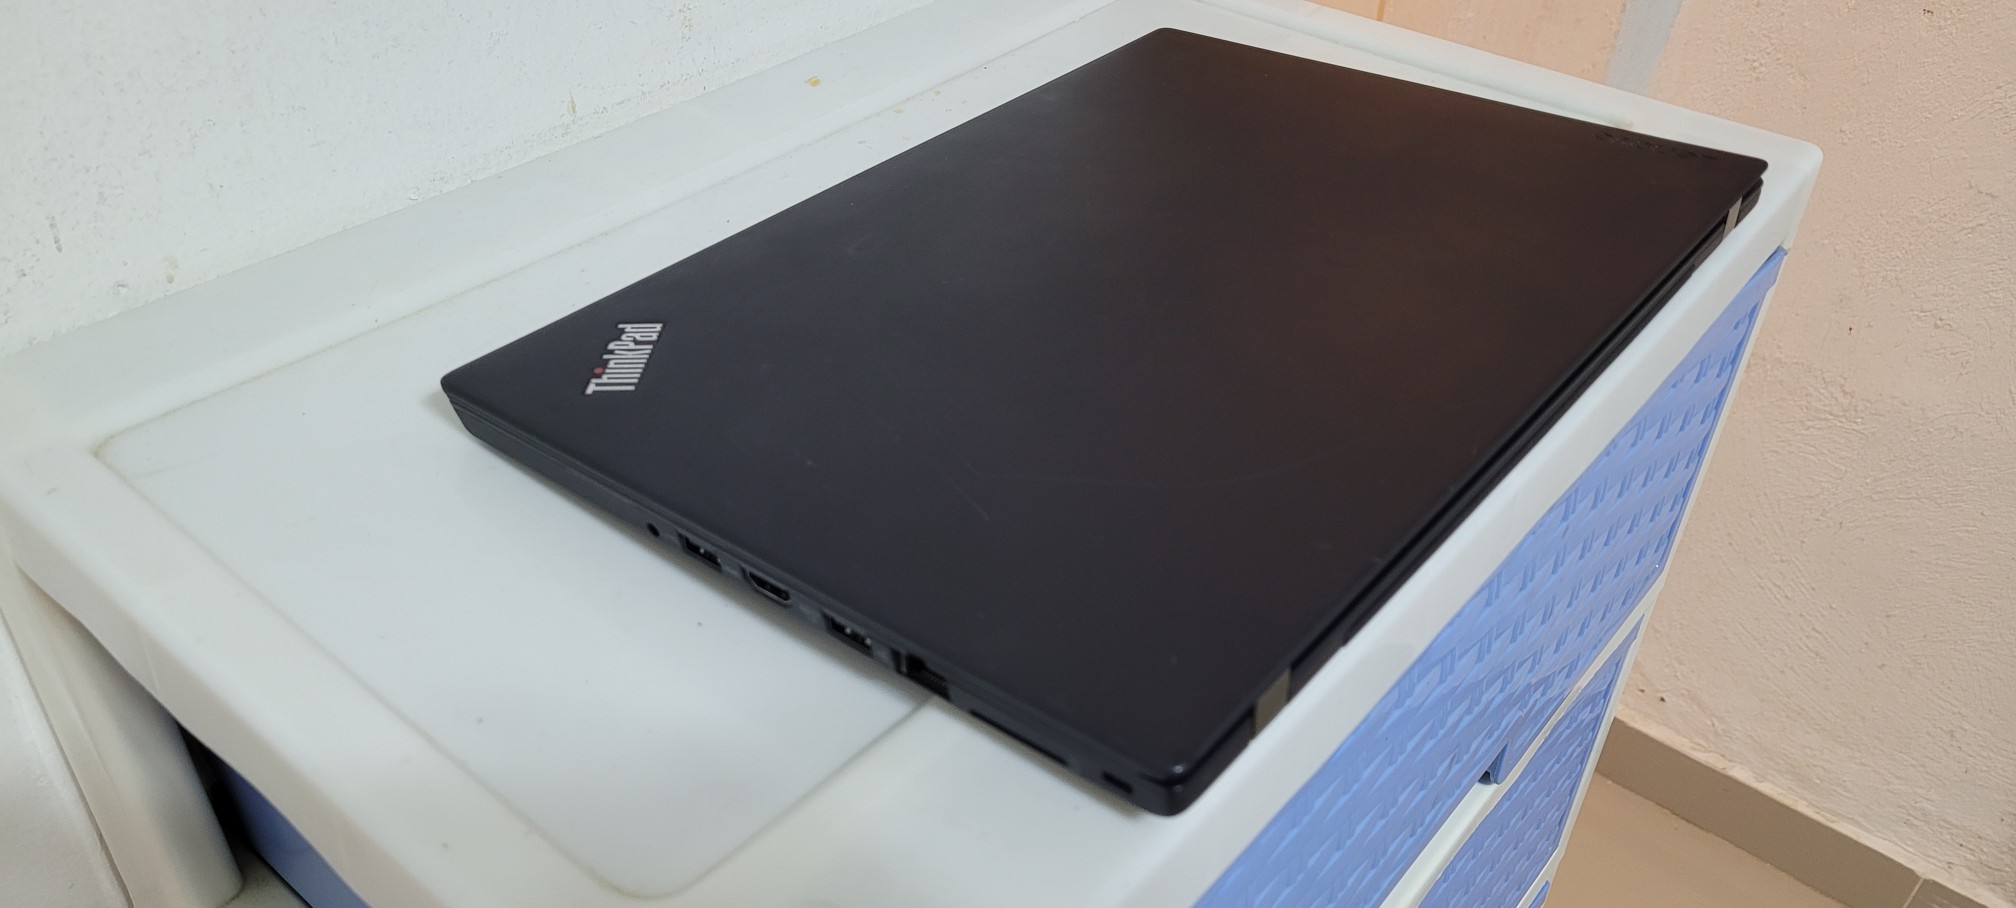 computadoras y laptops - lenovo 14 Pulg Core i7 Ram 8gb Disco 256gb SSD Solido 1080p 2